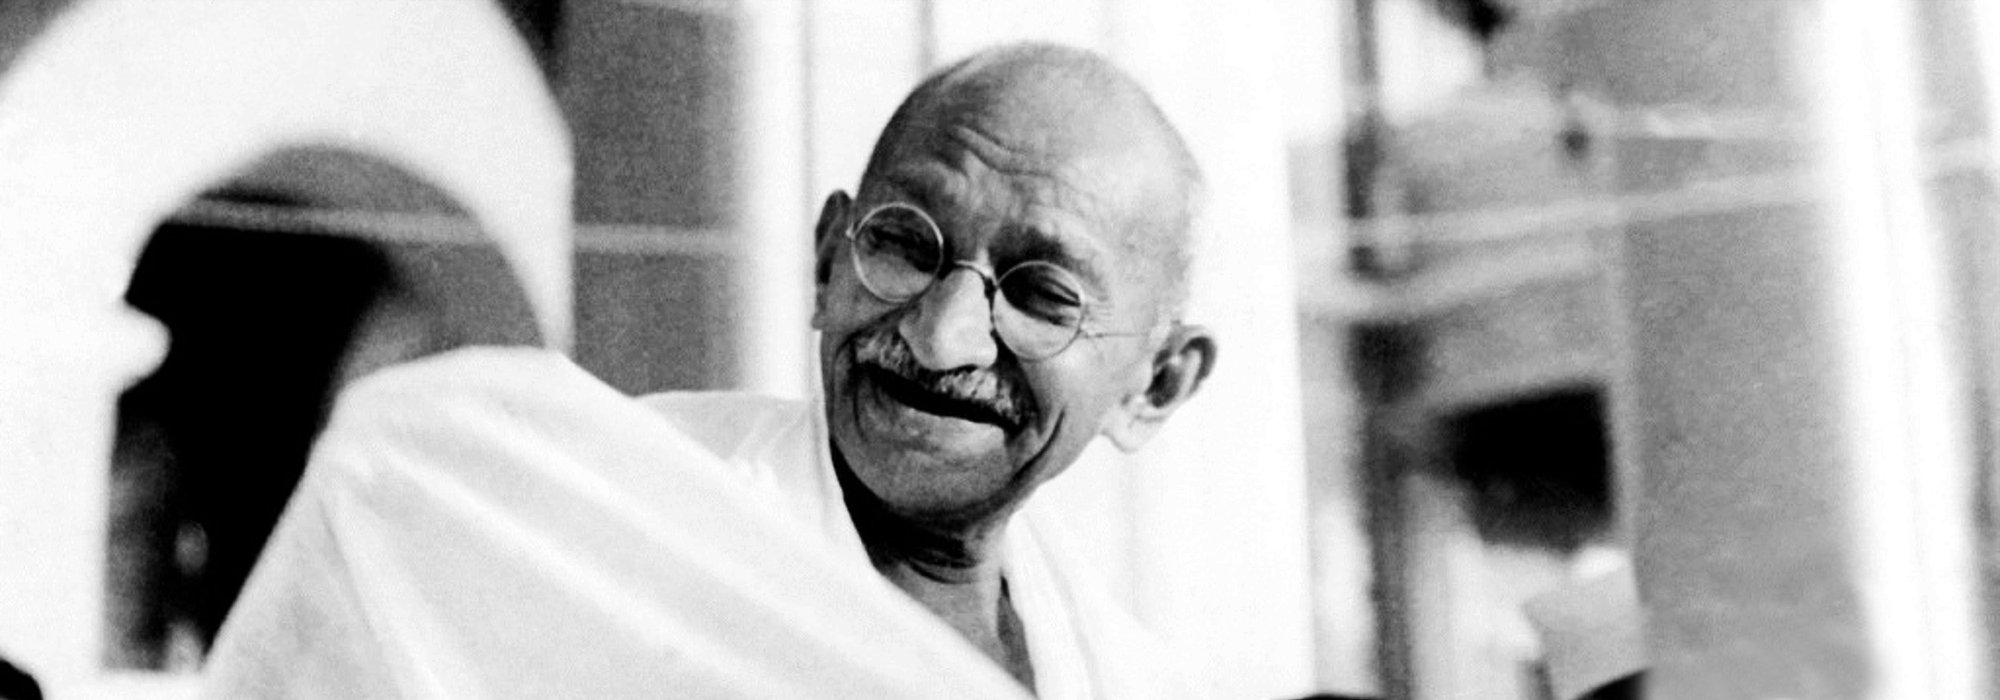 Gandhi addressing Dandi March